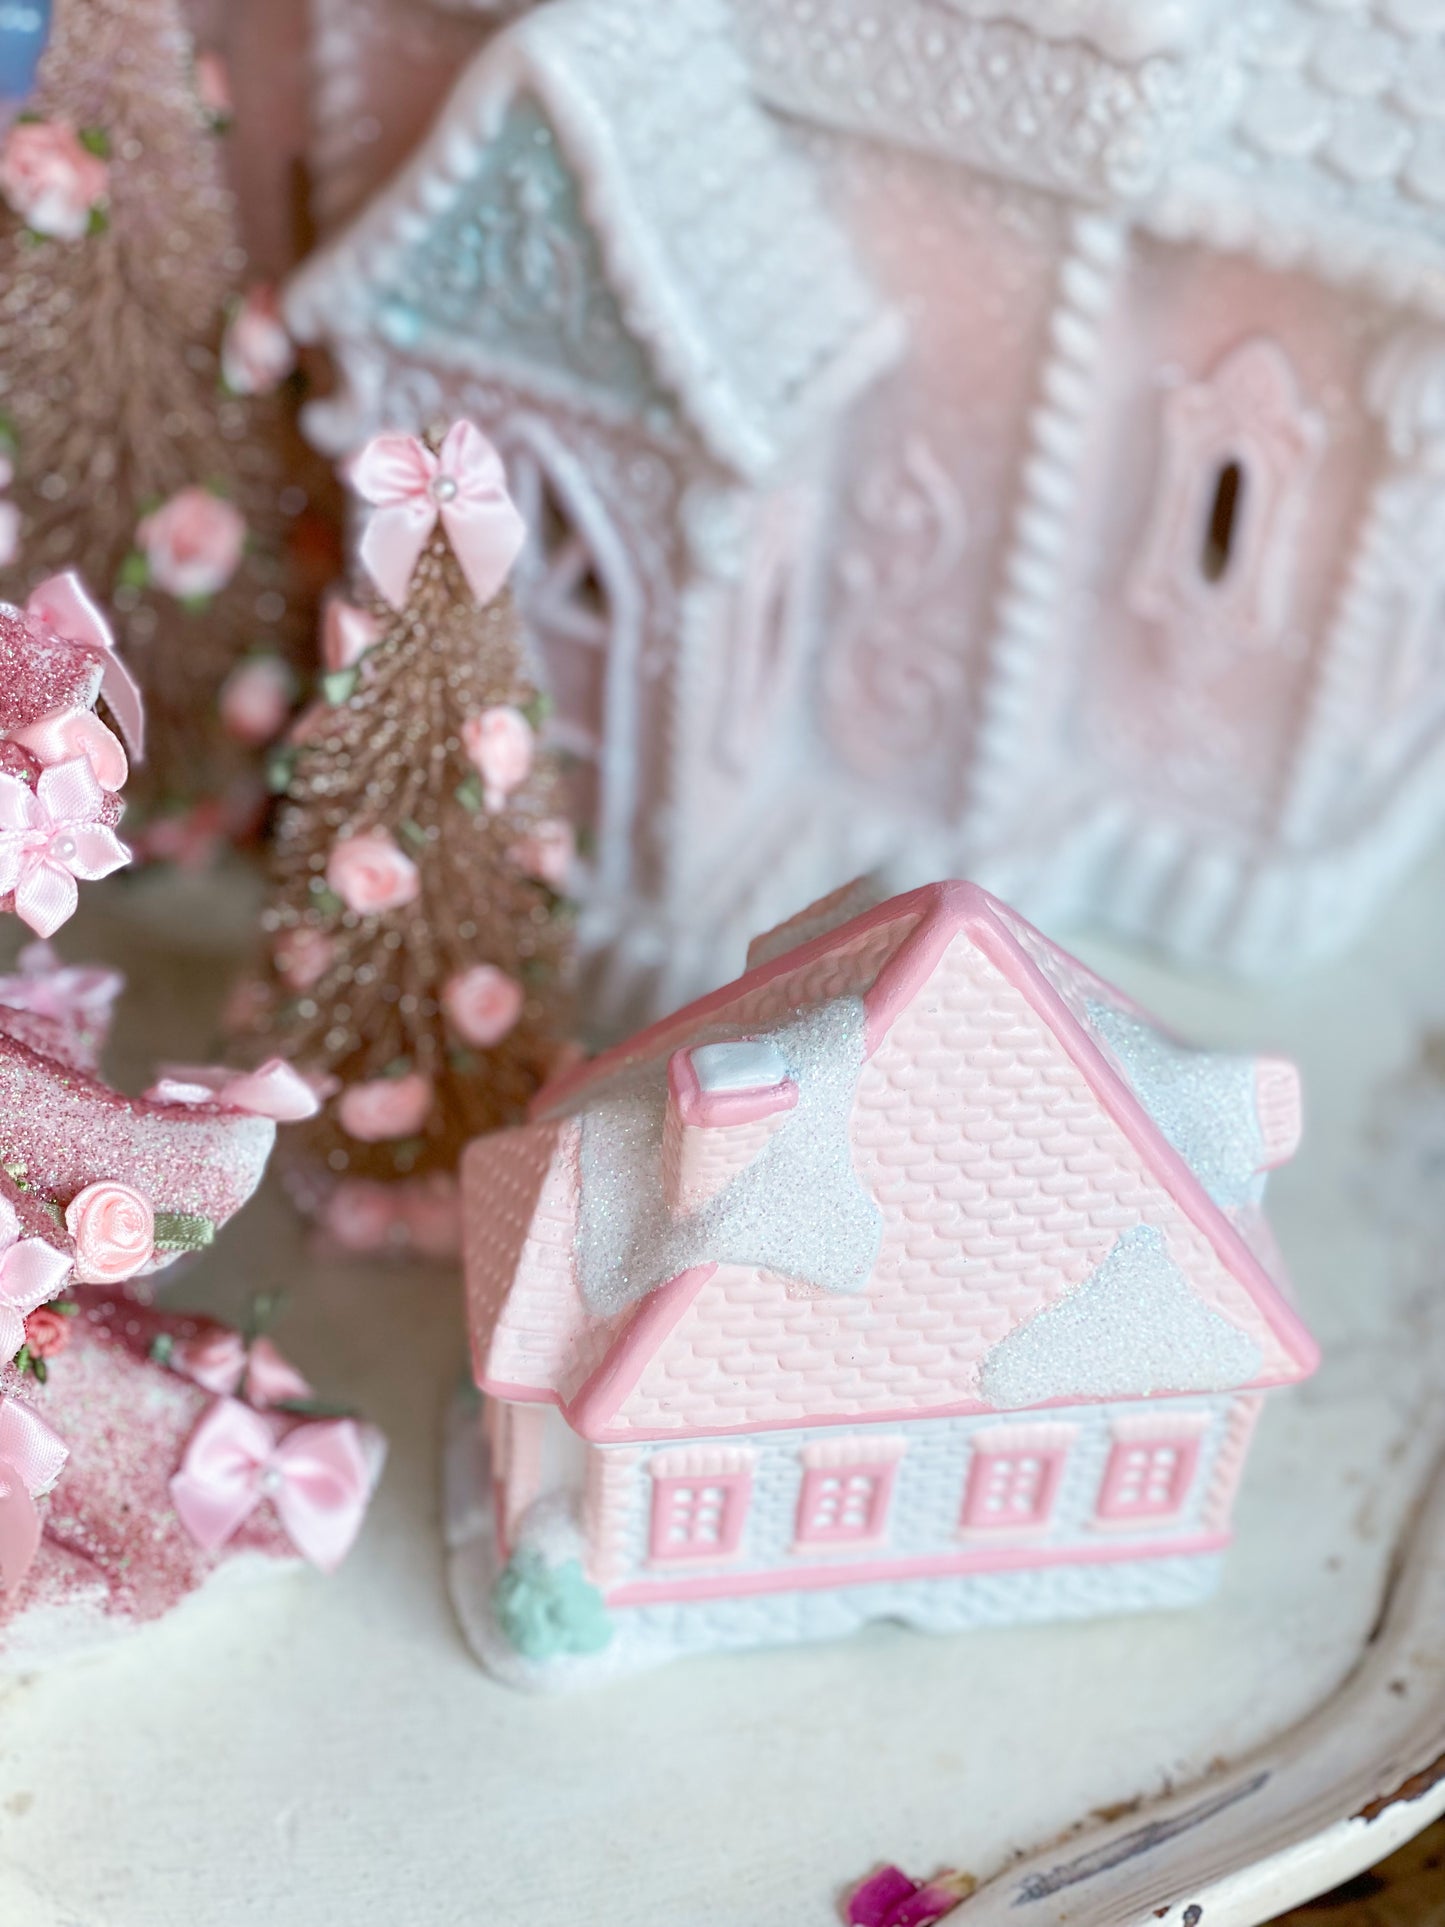 Bespoke Petite Pastel Pink Christmas Village Toy Shop Pre-order